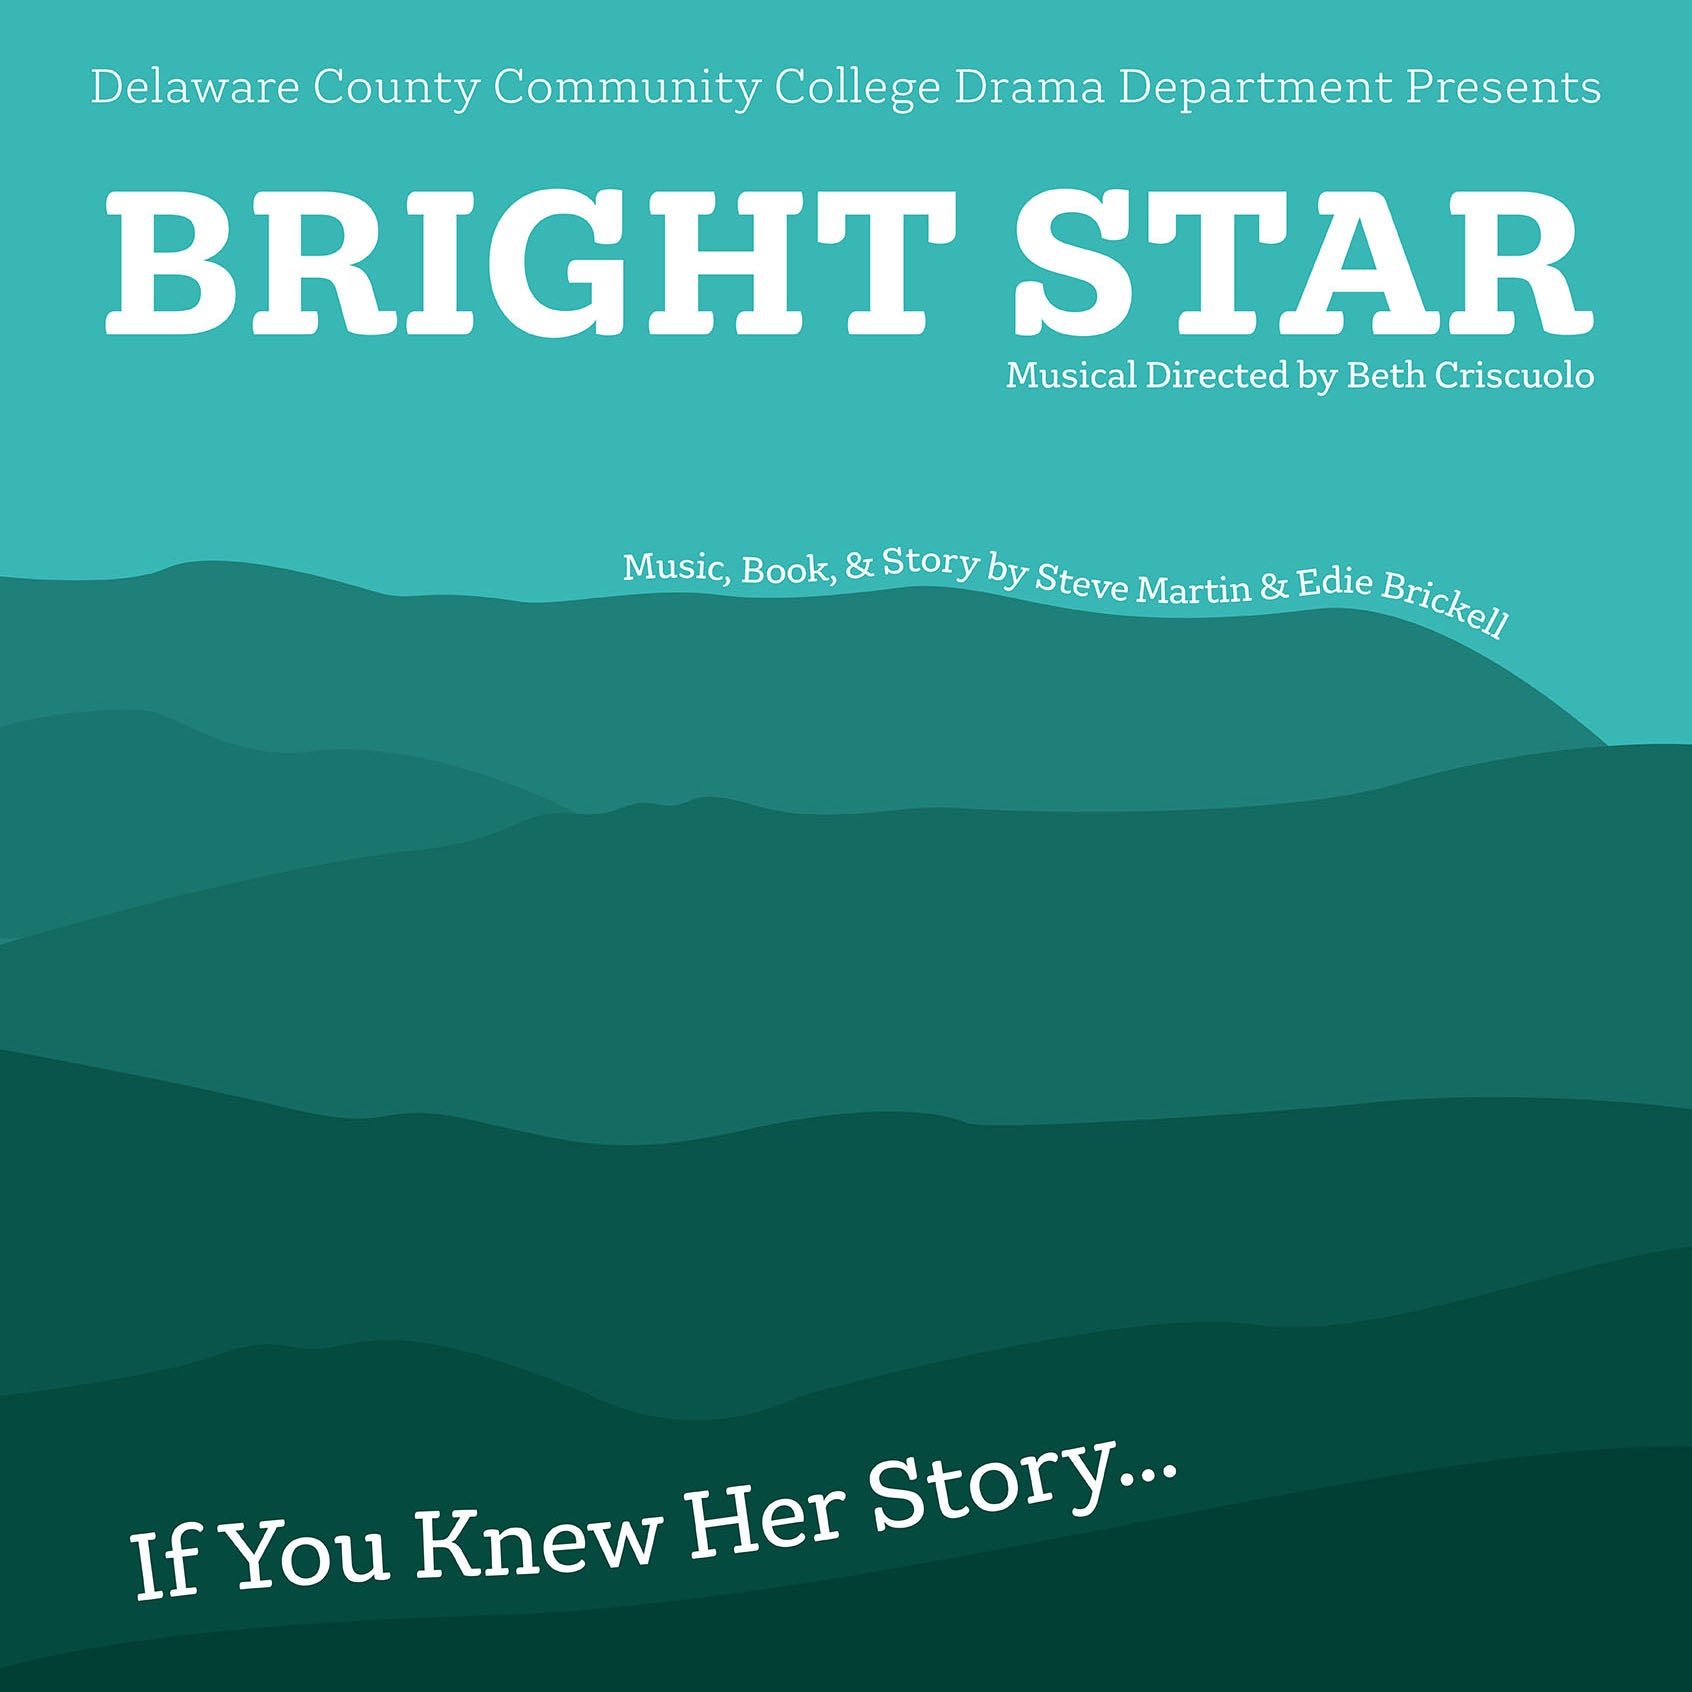 Brightstar poster graphic